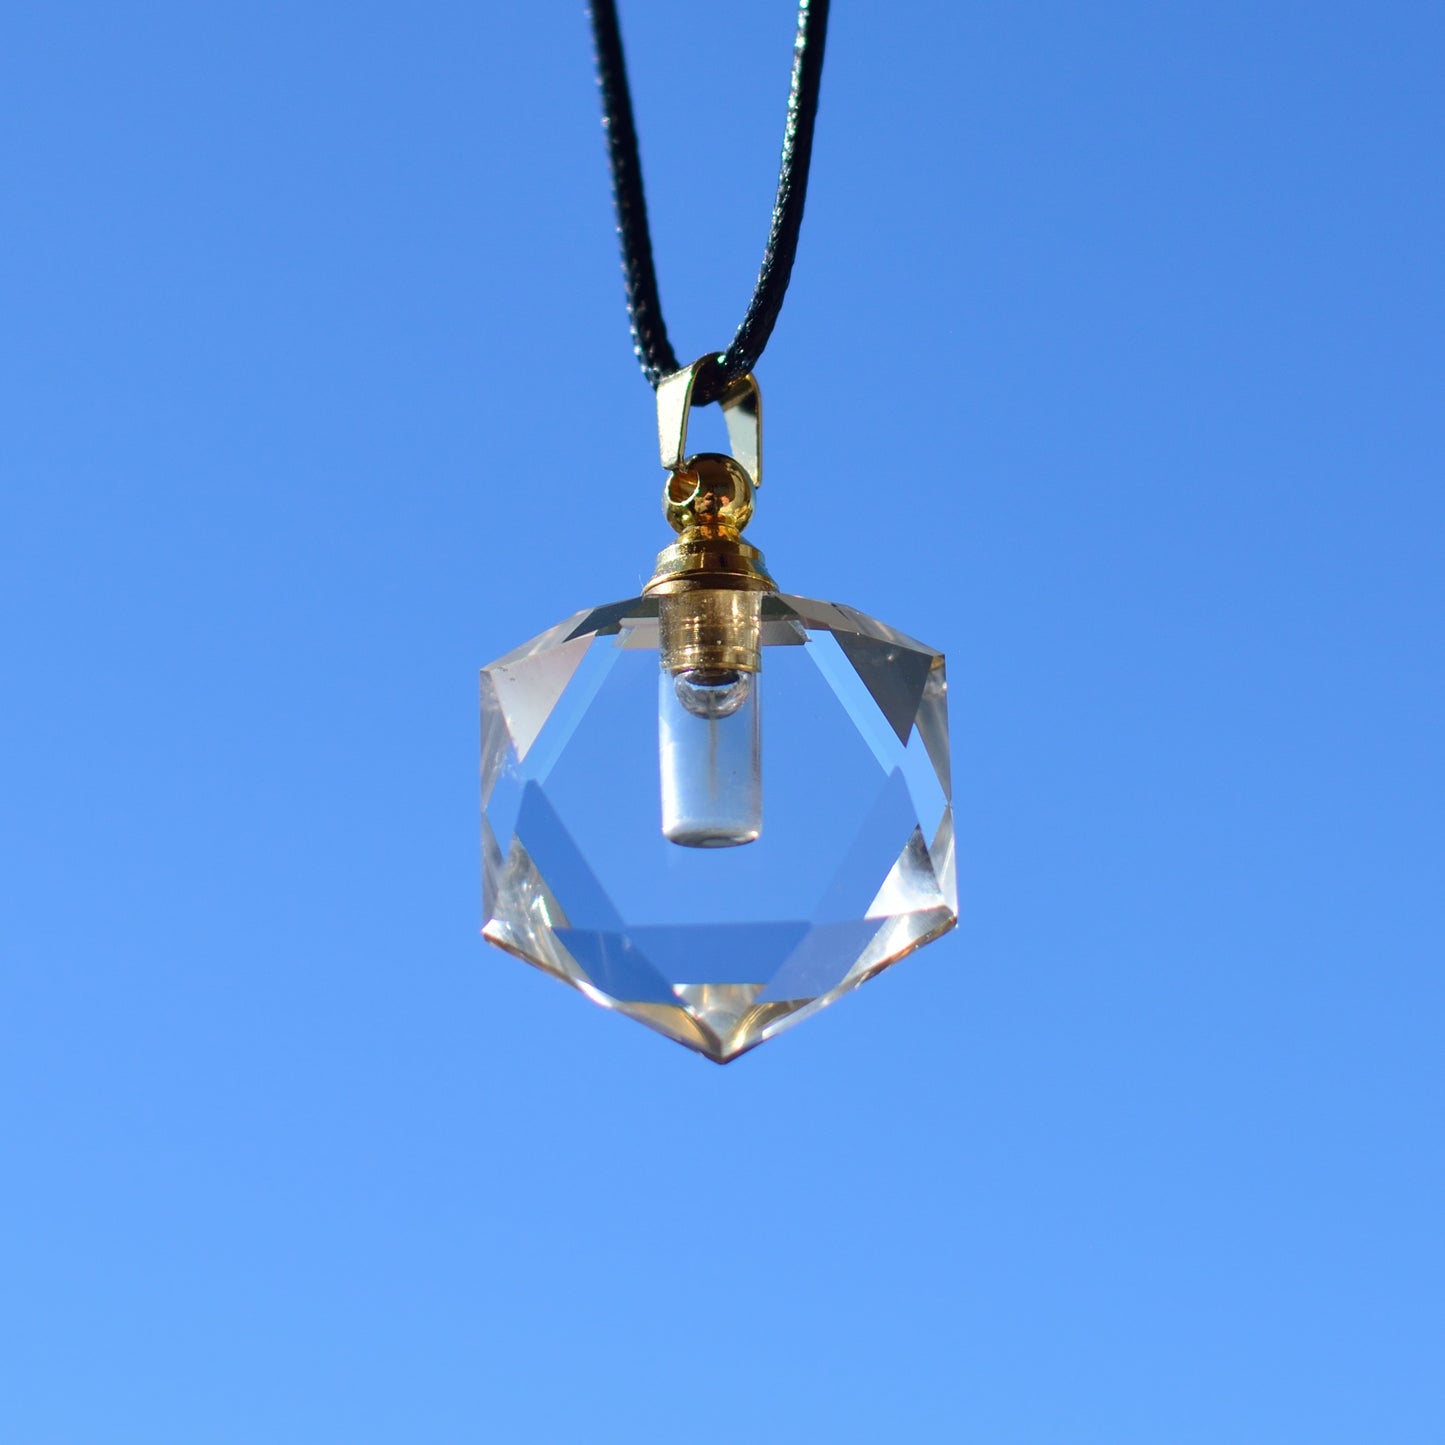 Attract Love and Abundance with the SUNLIGHT RIPPLES Liquid Plasma Crystal Amulet